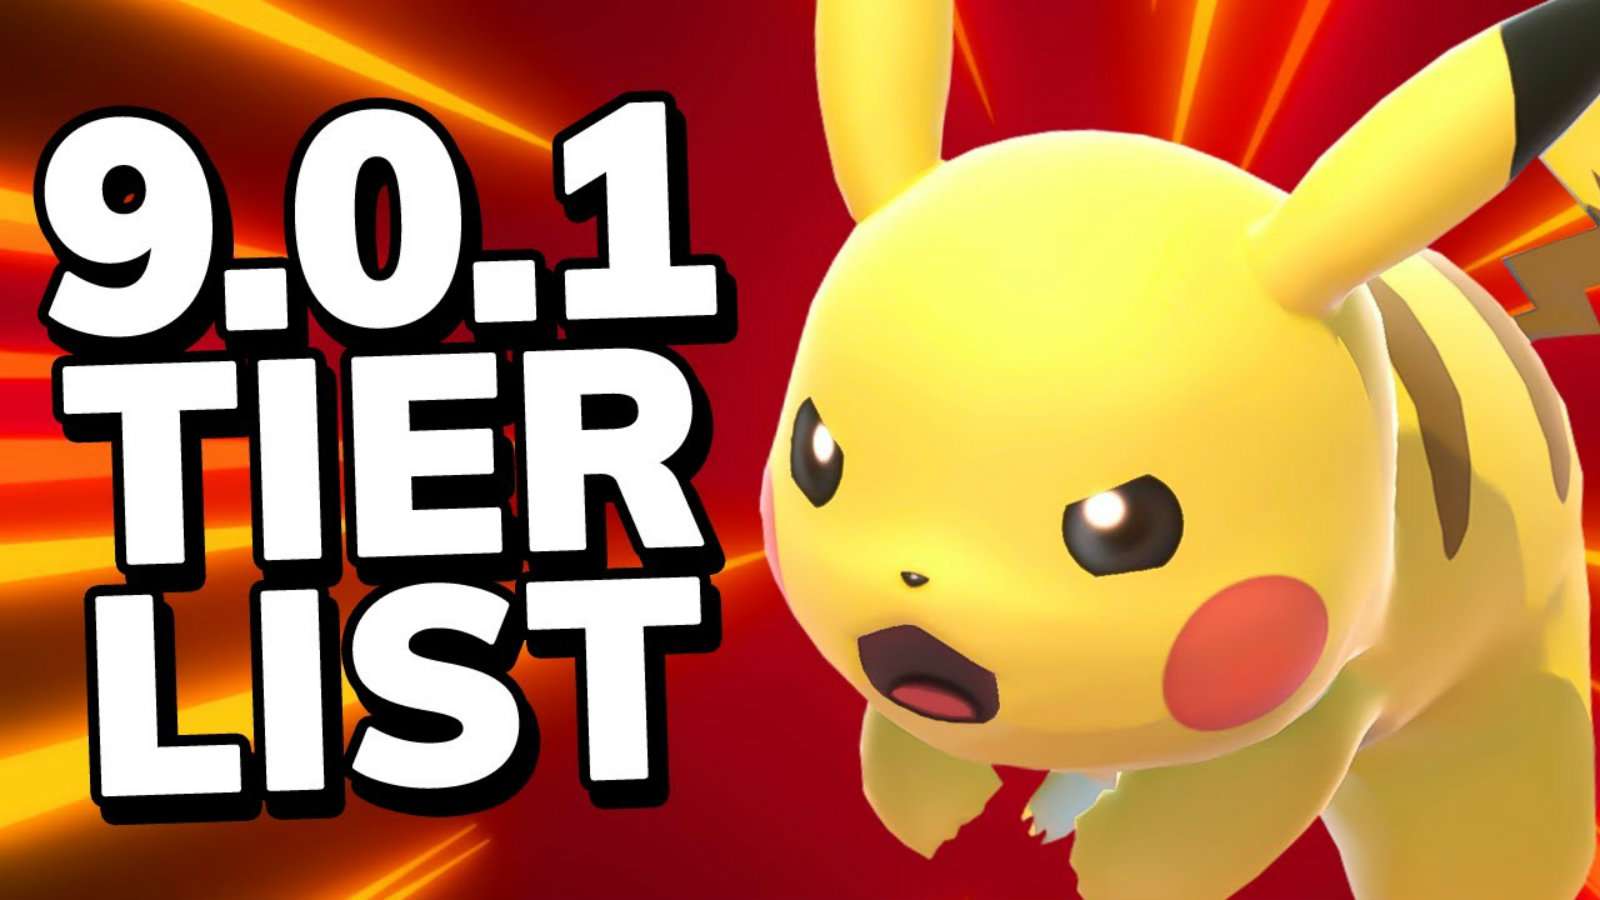 Pikachu in Smash tier list